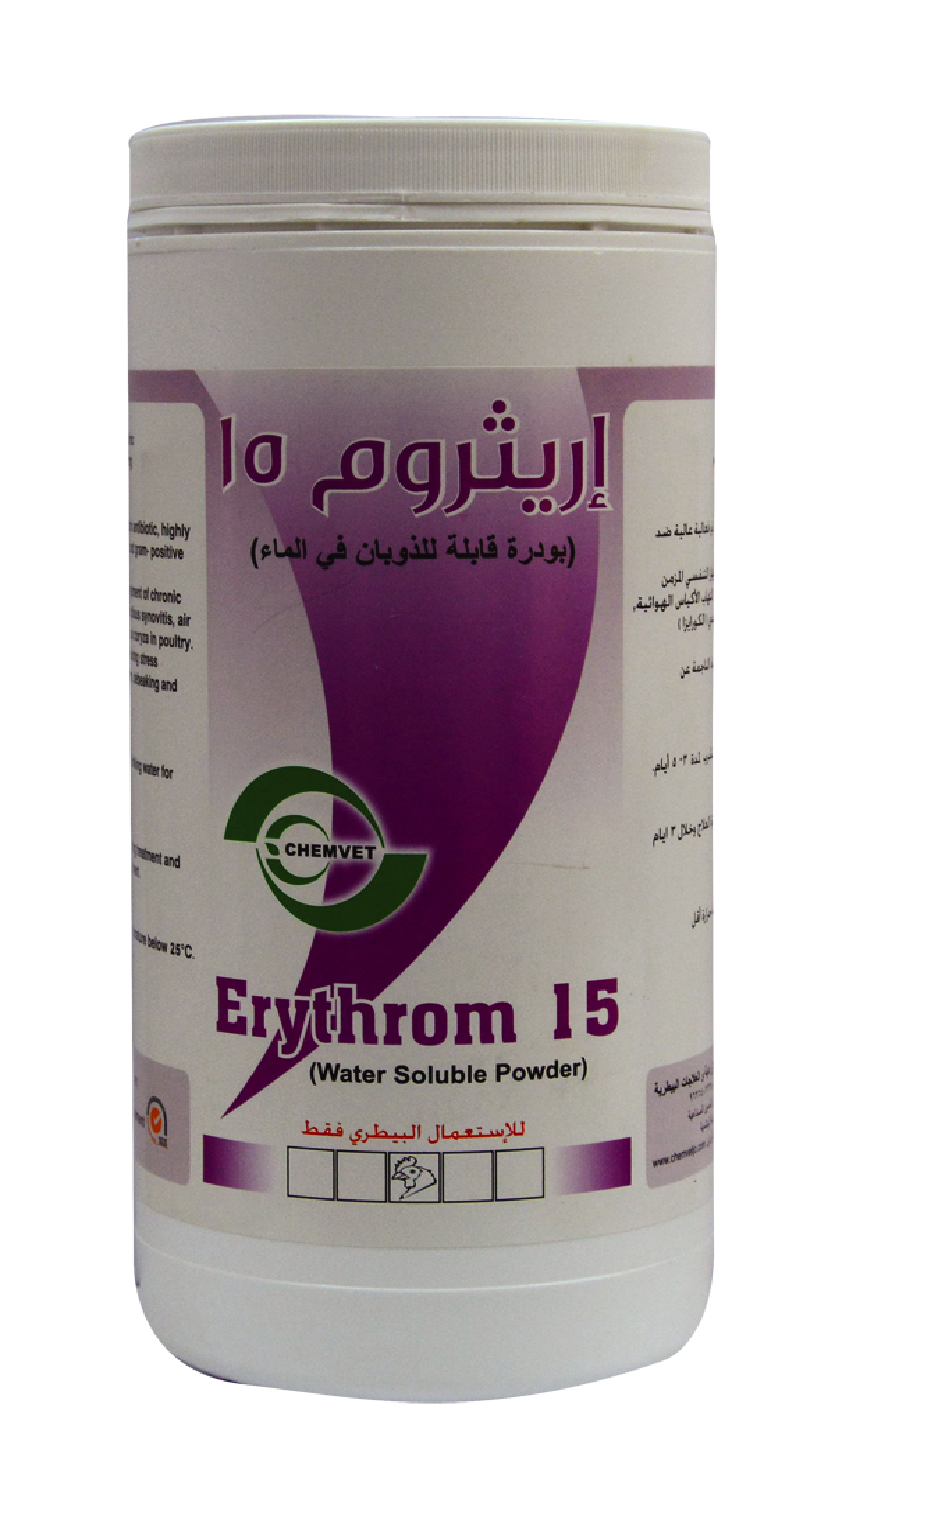 Erythrom 15